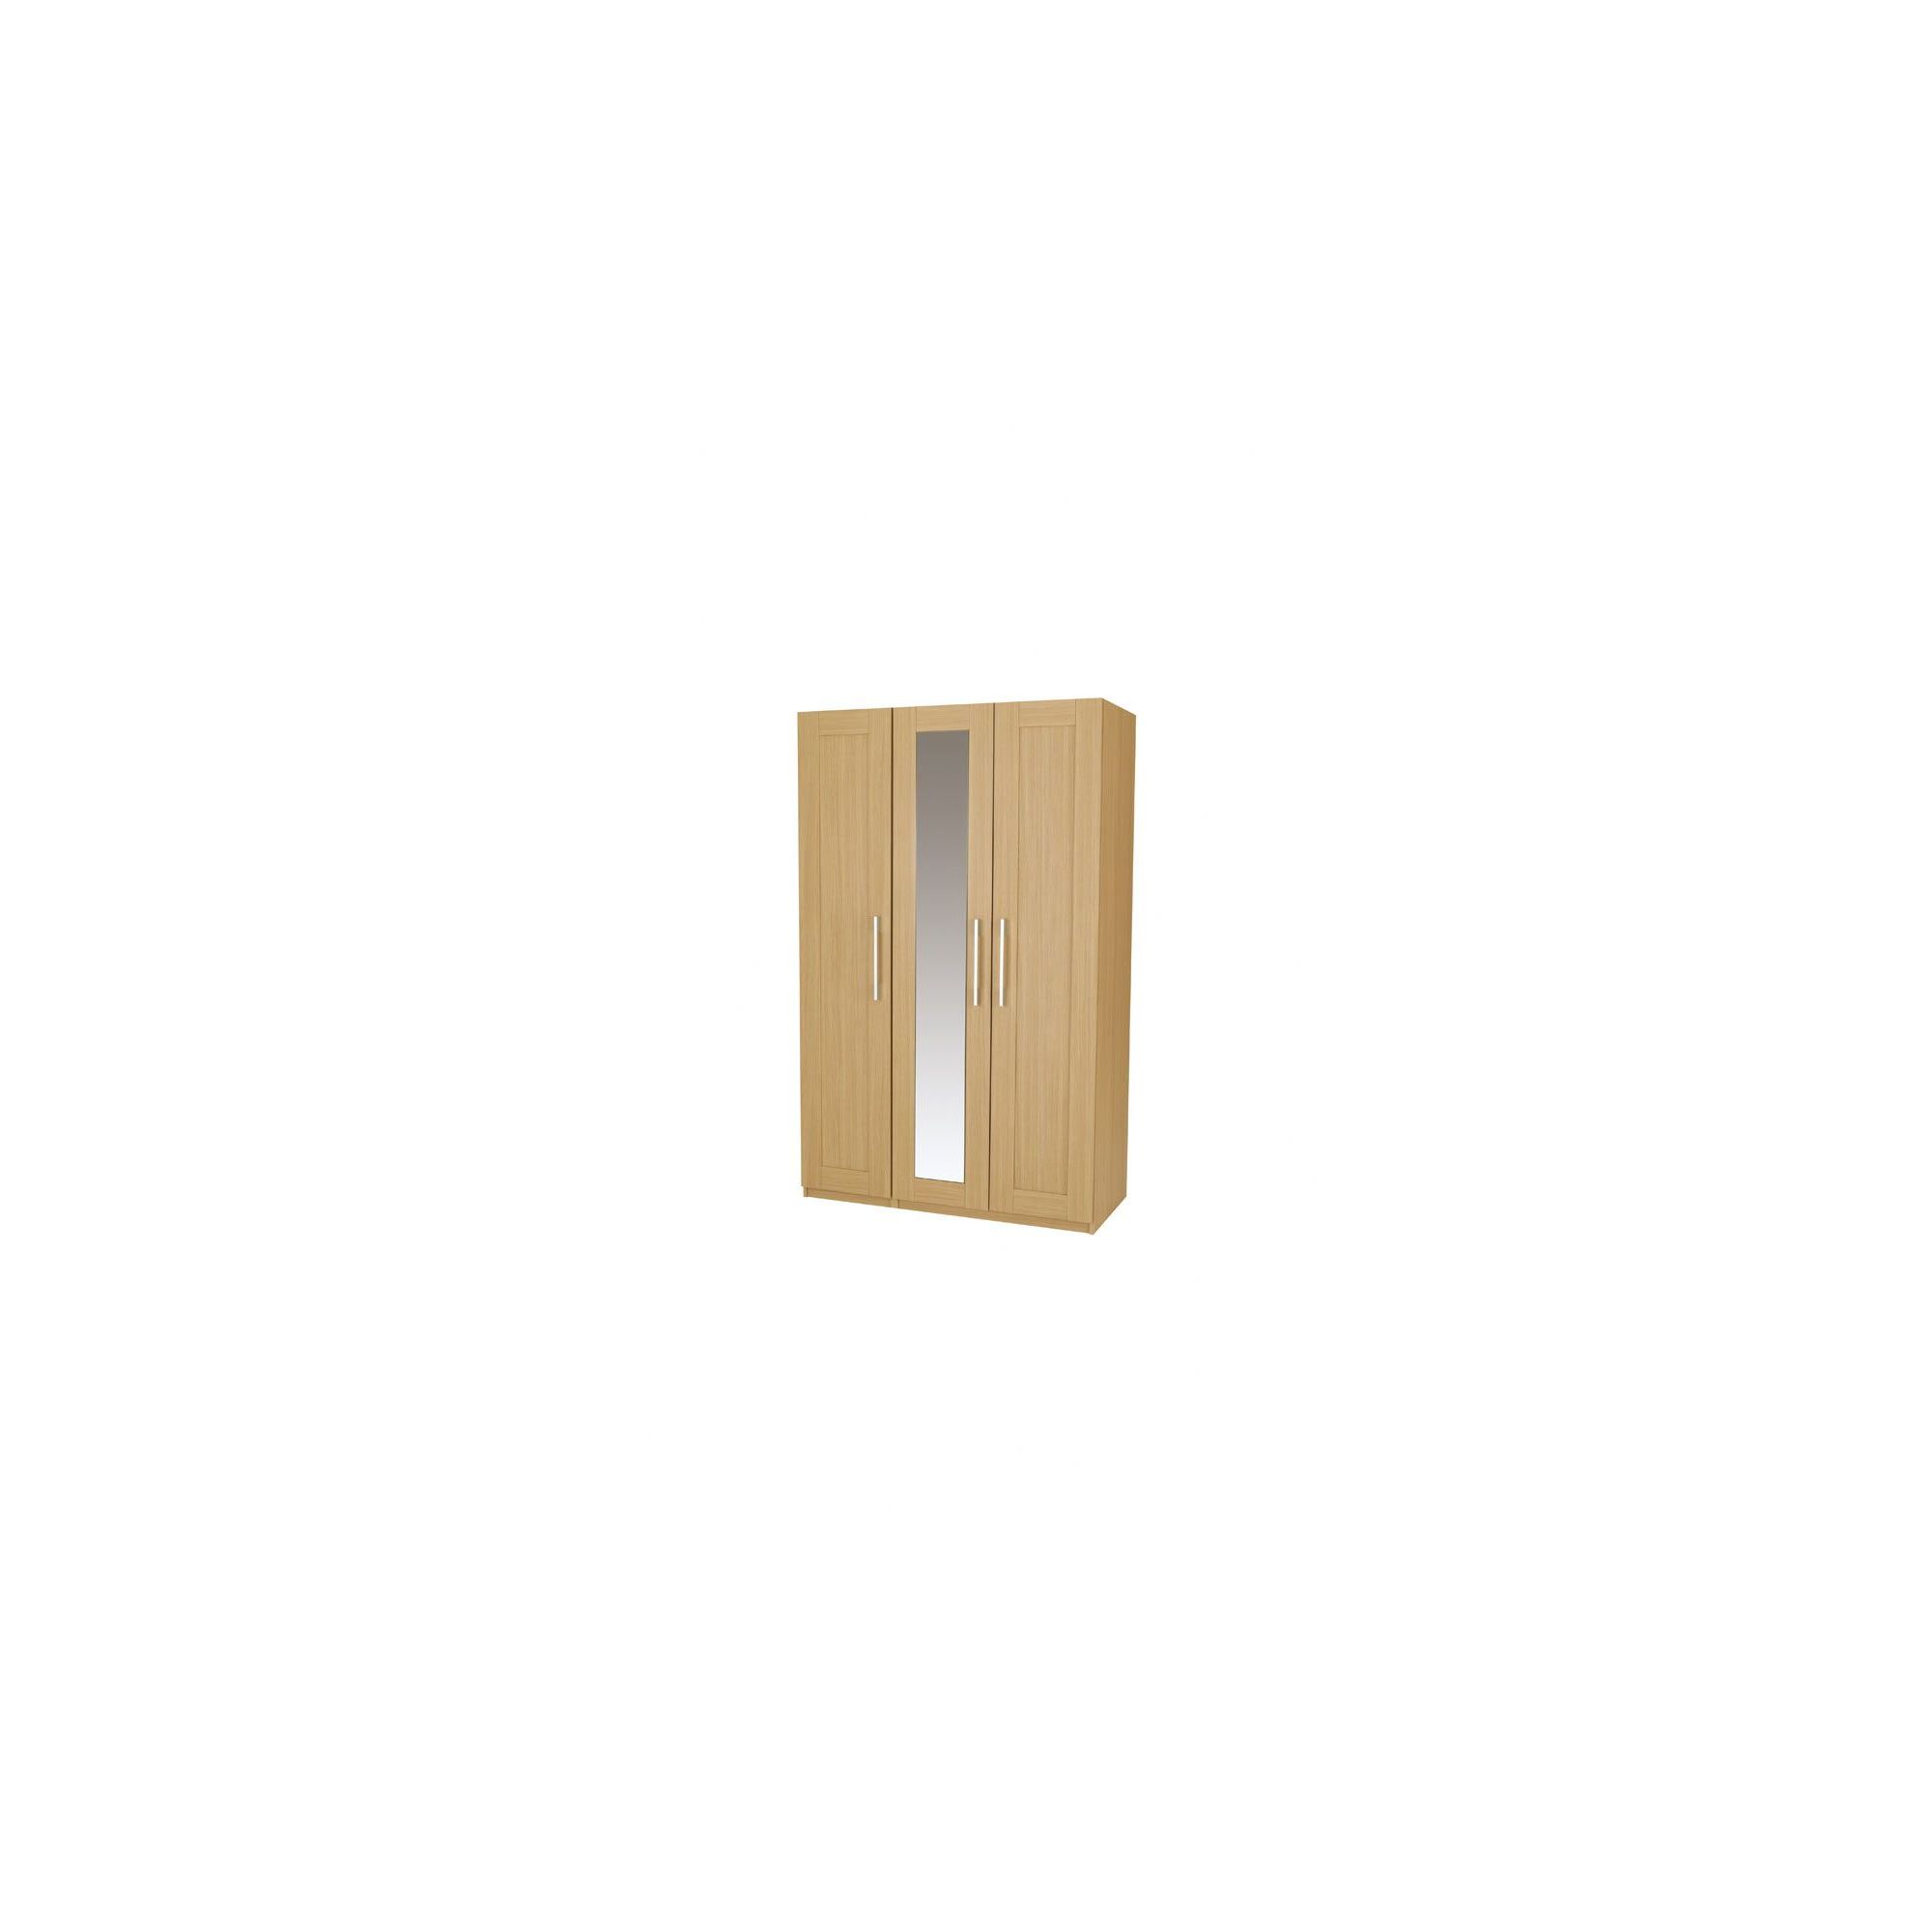 Alto Furniture Visualise Shaker Three Door Wardrobe with Mirror in Veradi Oak at Tesco Direct